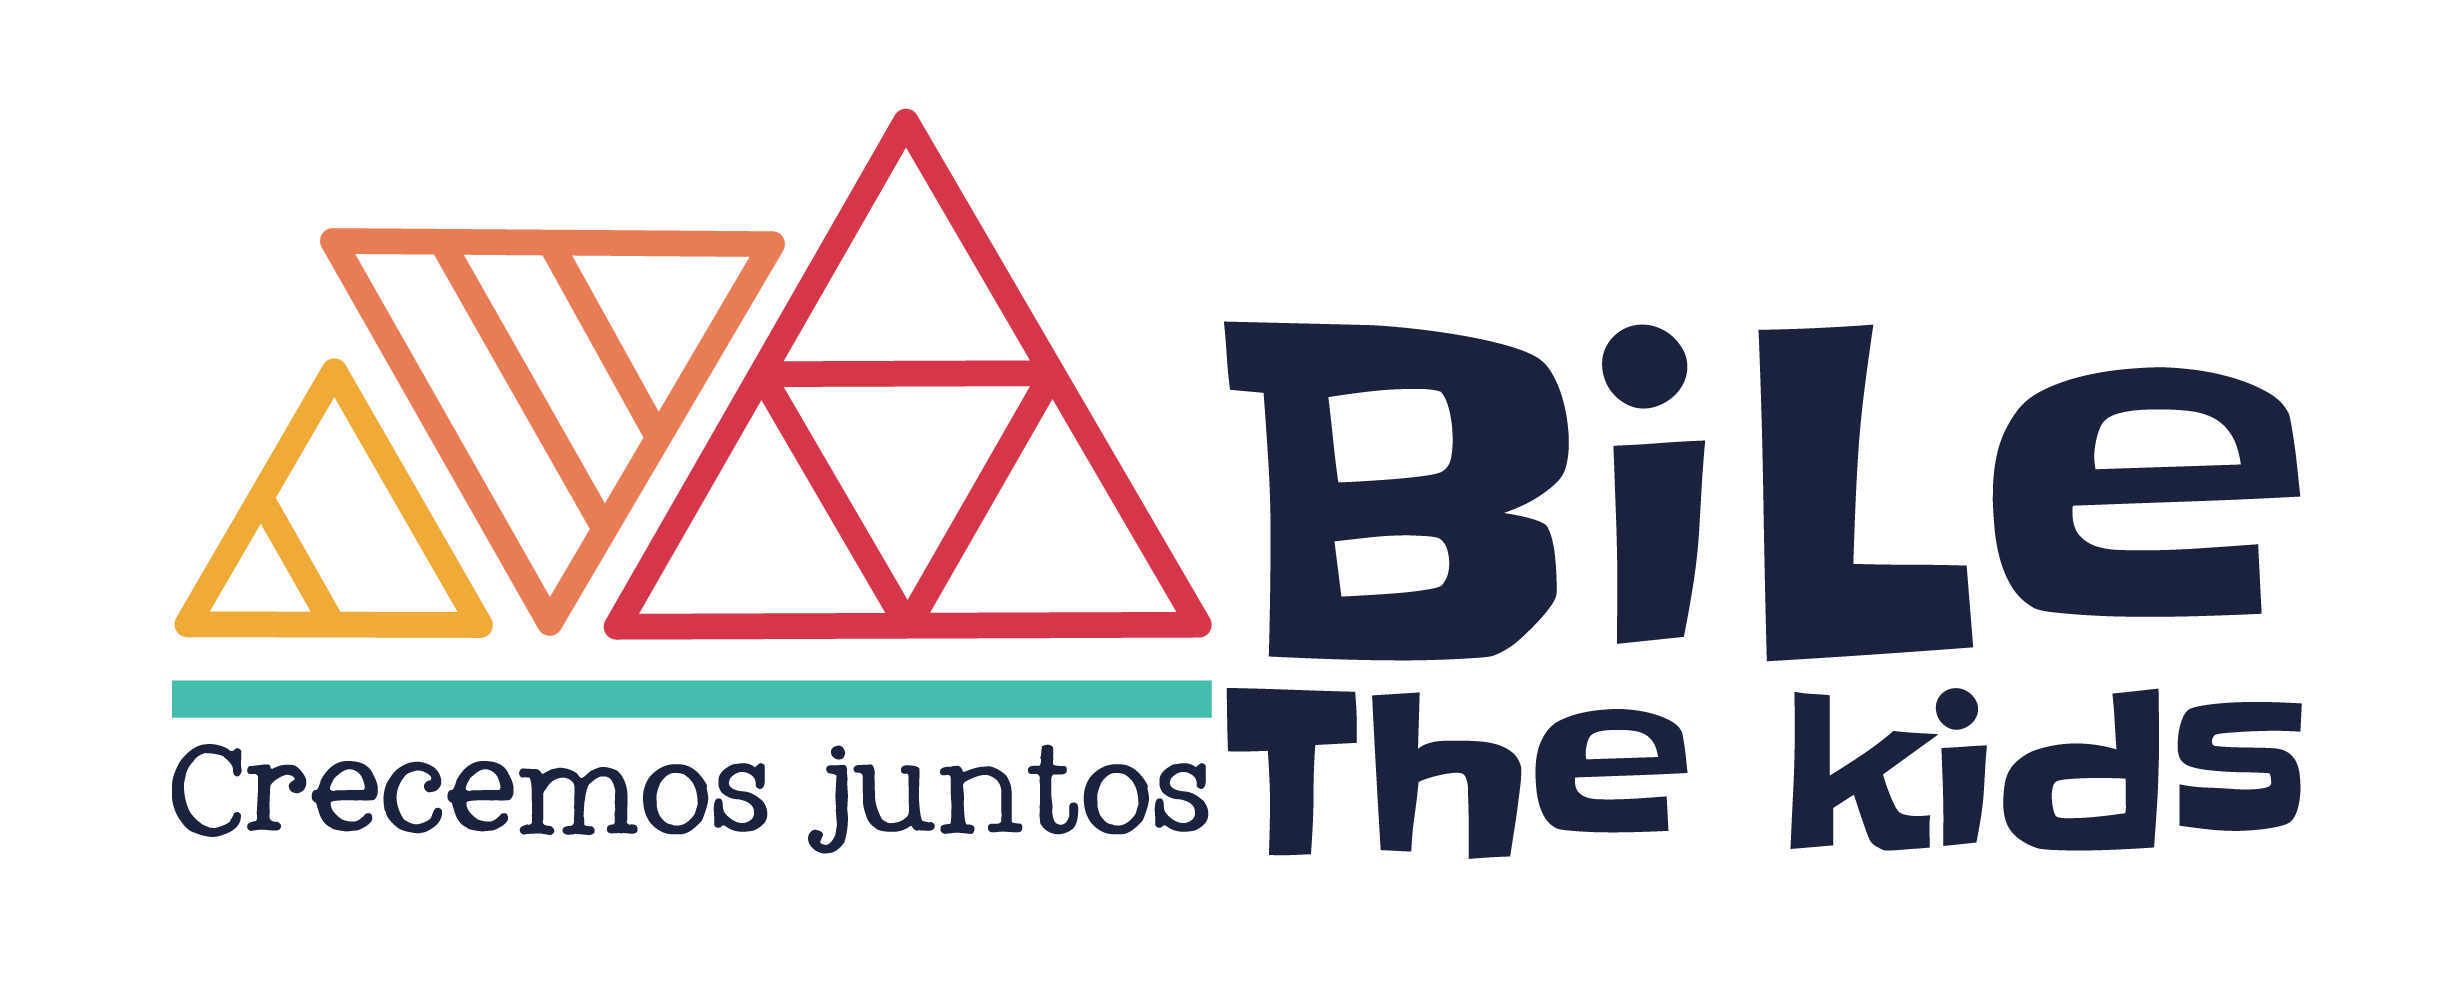 BILETHEKIDS-logo-horizontal